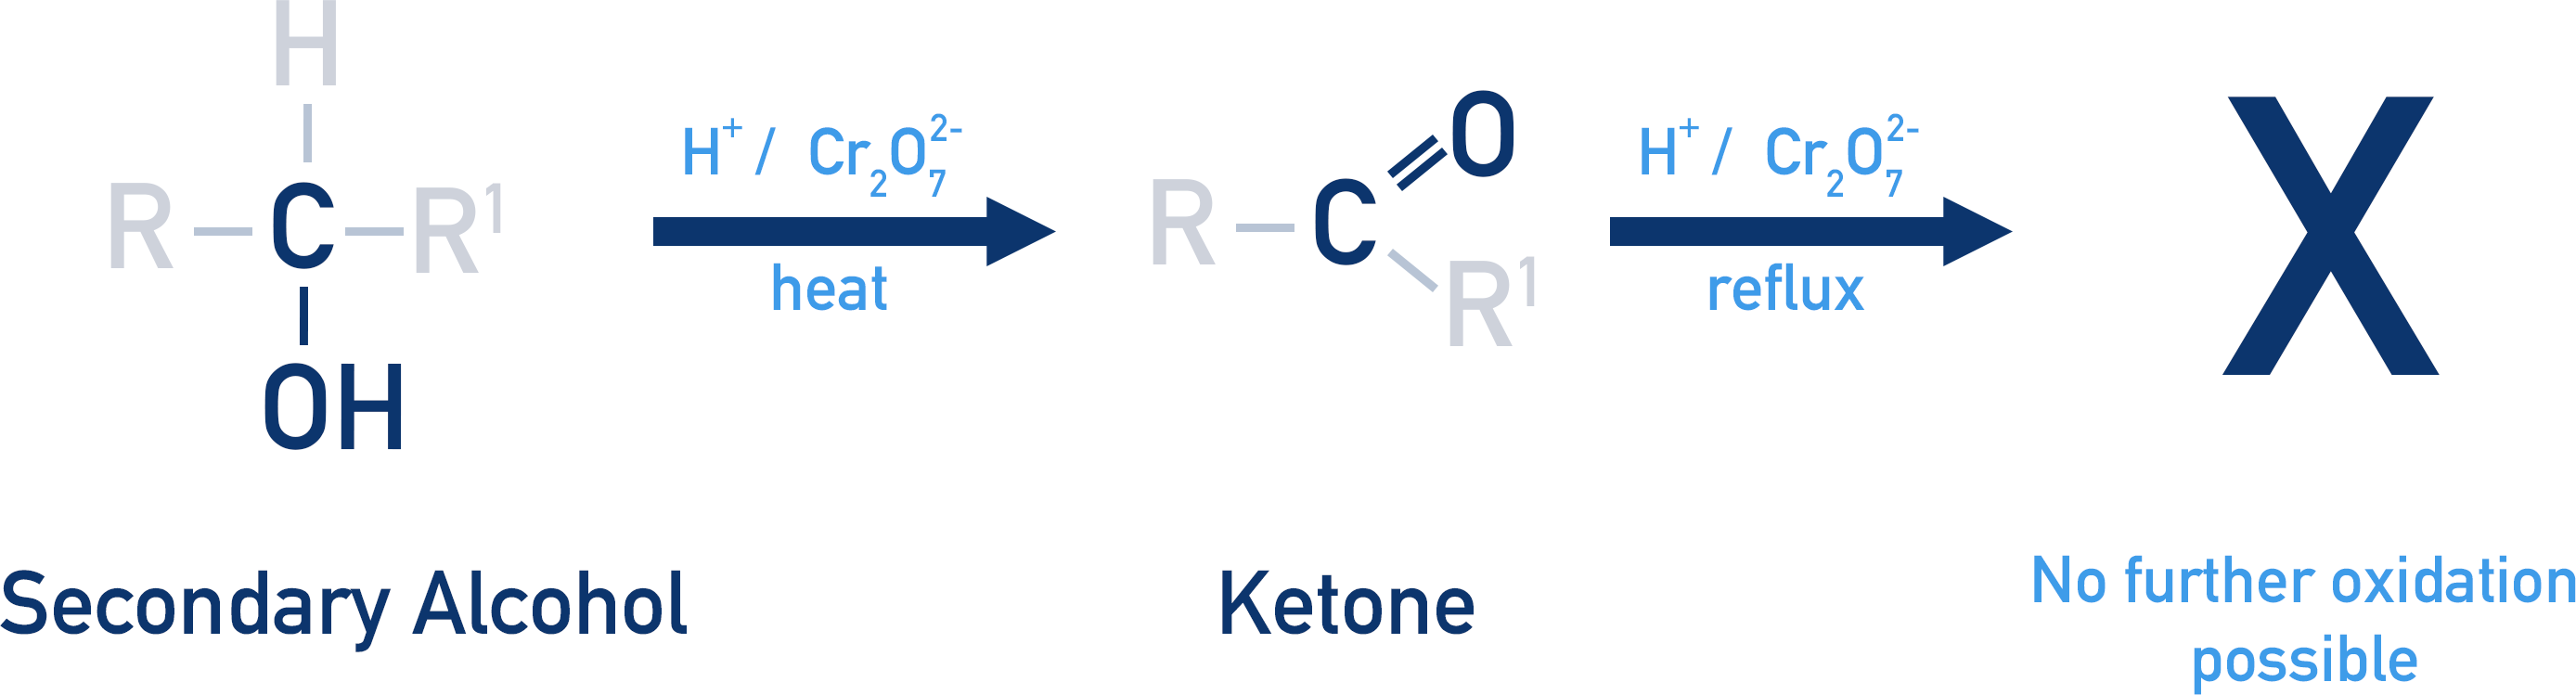 oxidation of secondary alcohol to ketone